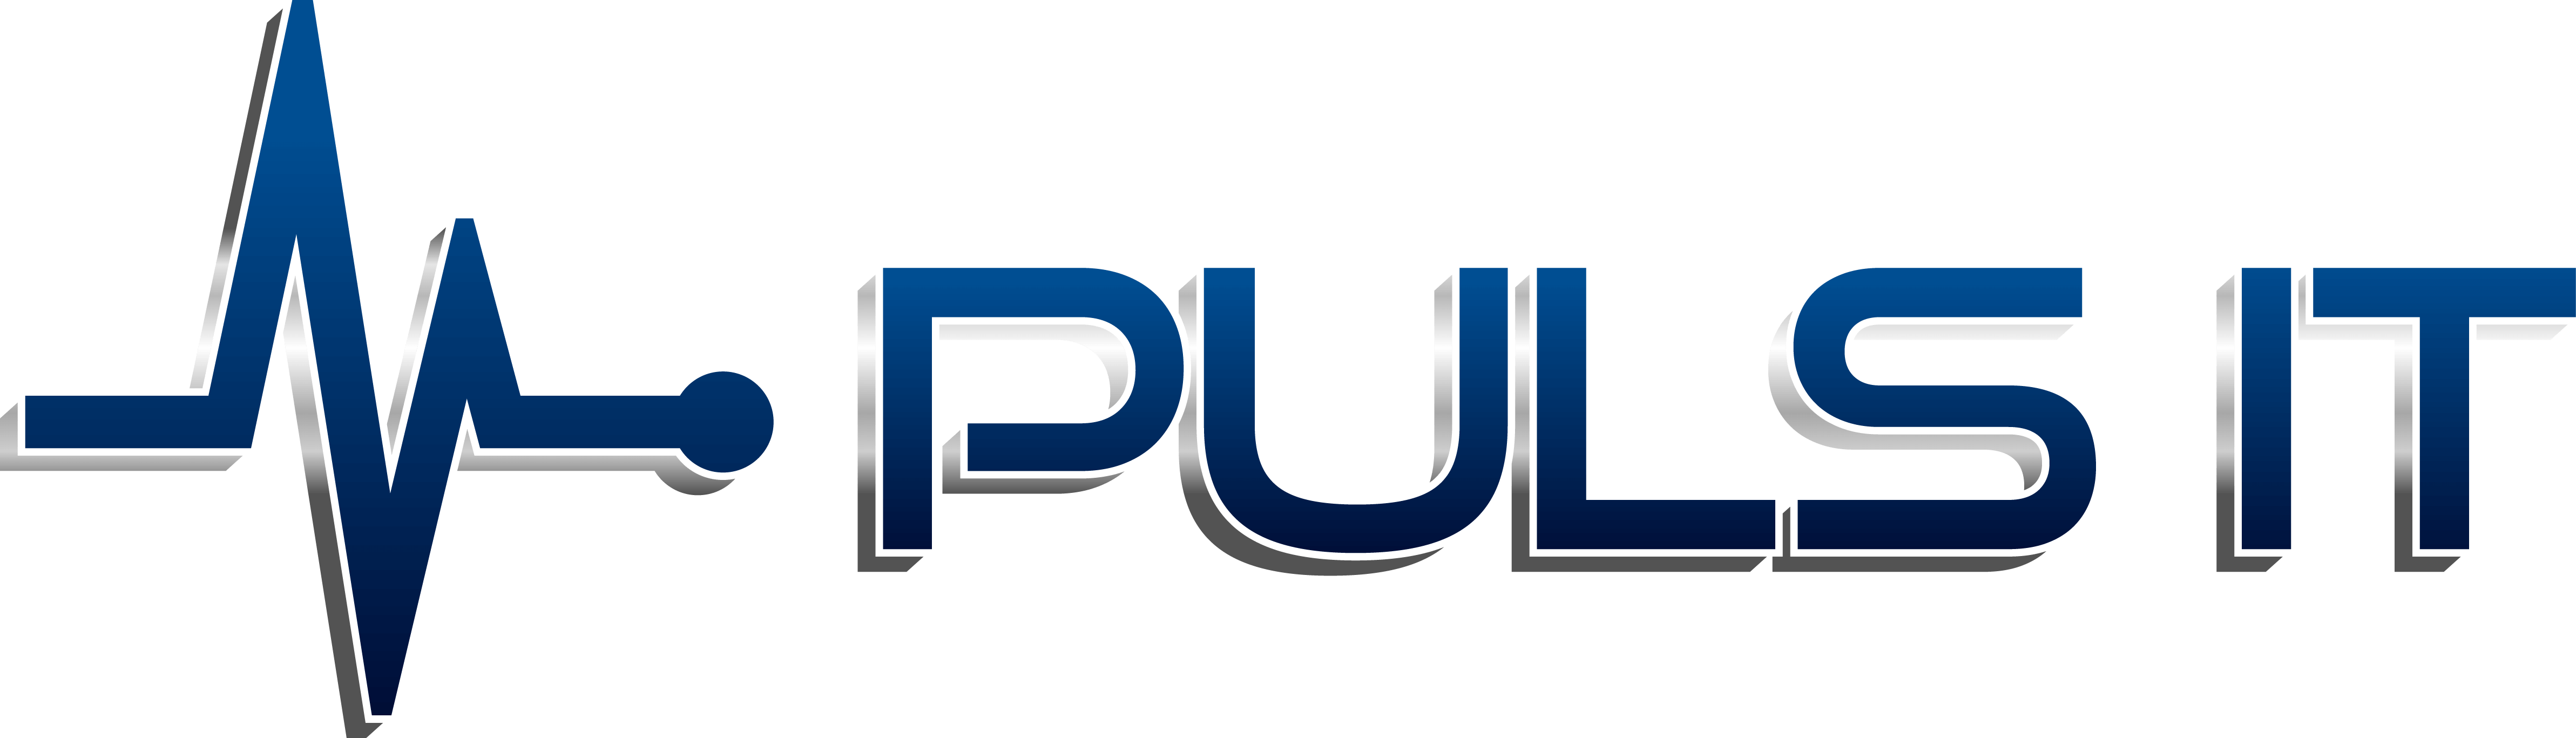 Puls IT Services - Sorgenloser IT Betrieb